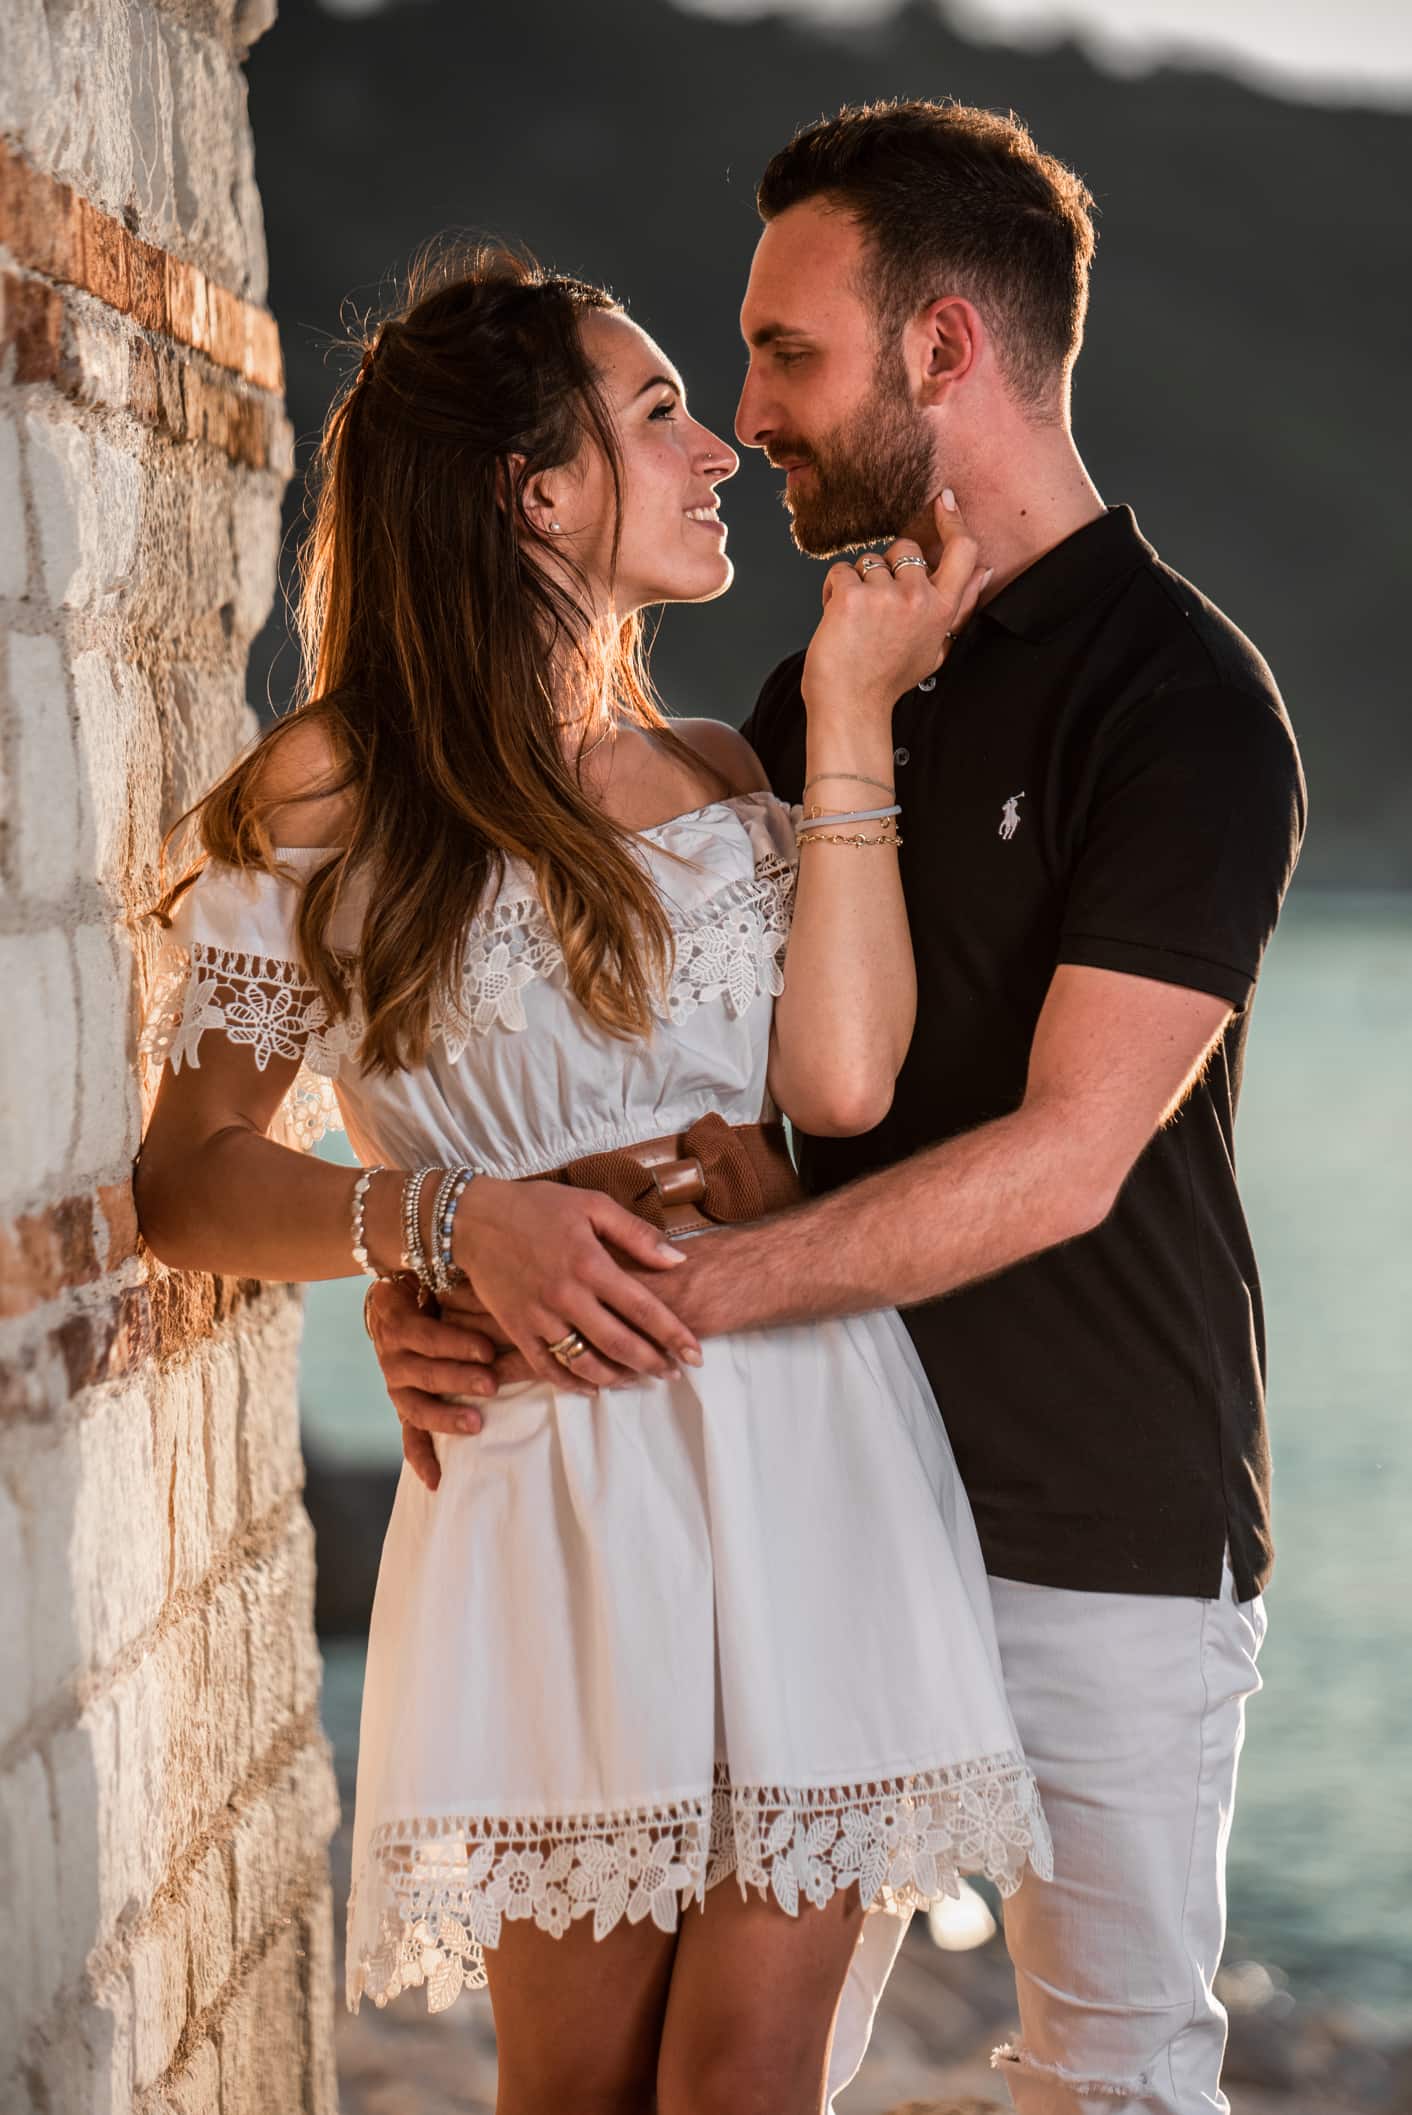 lorenzo-cristina-prematrimoniale-spiaggia-fotografo-matrimonio-milano-2